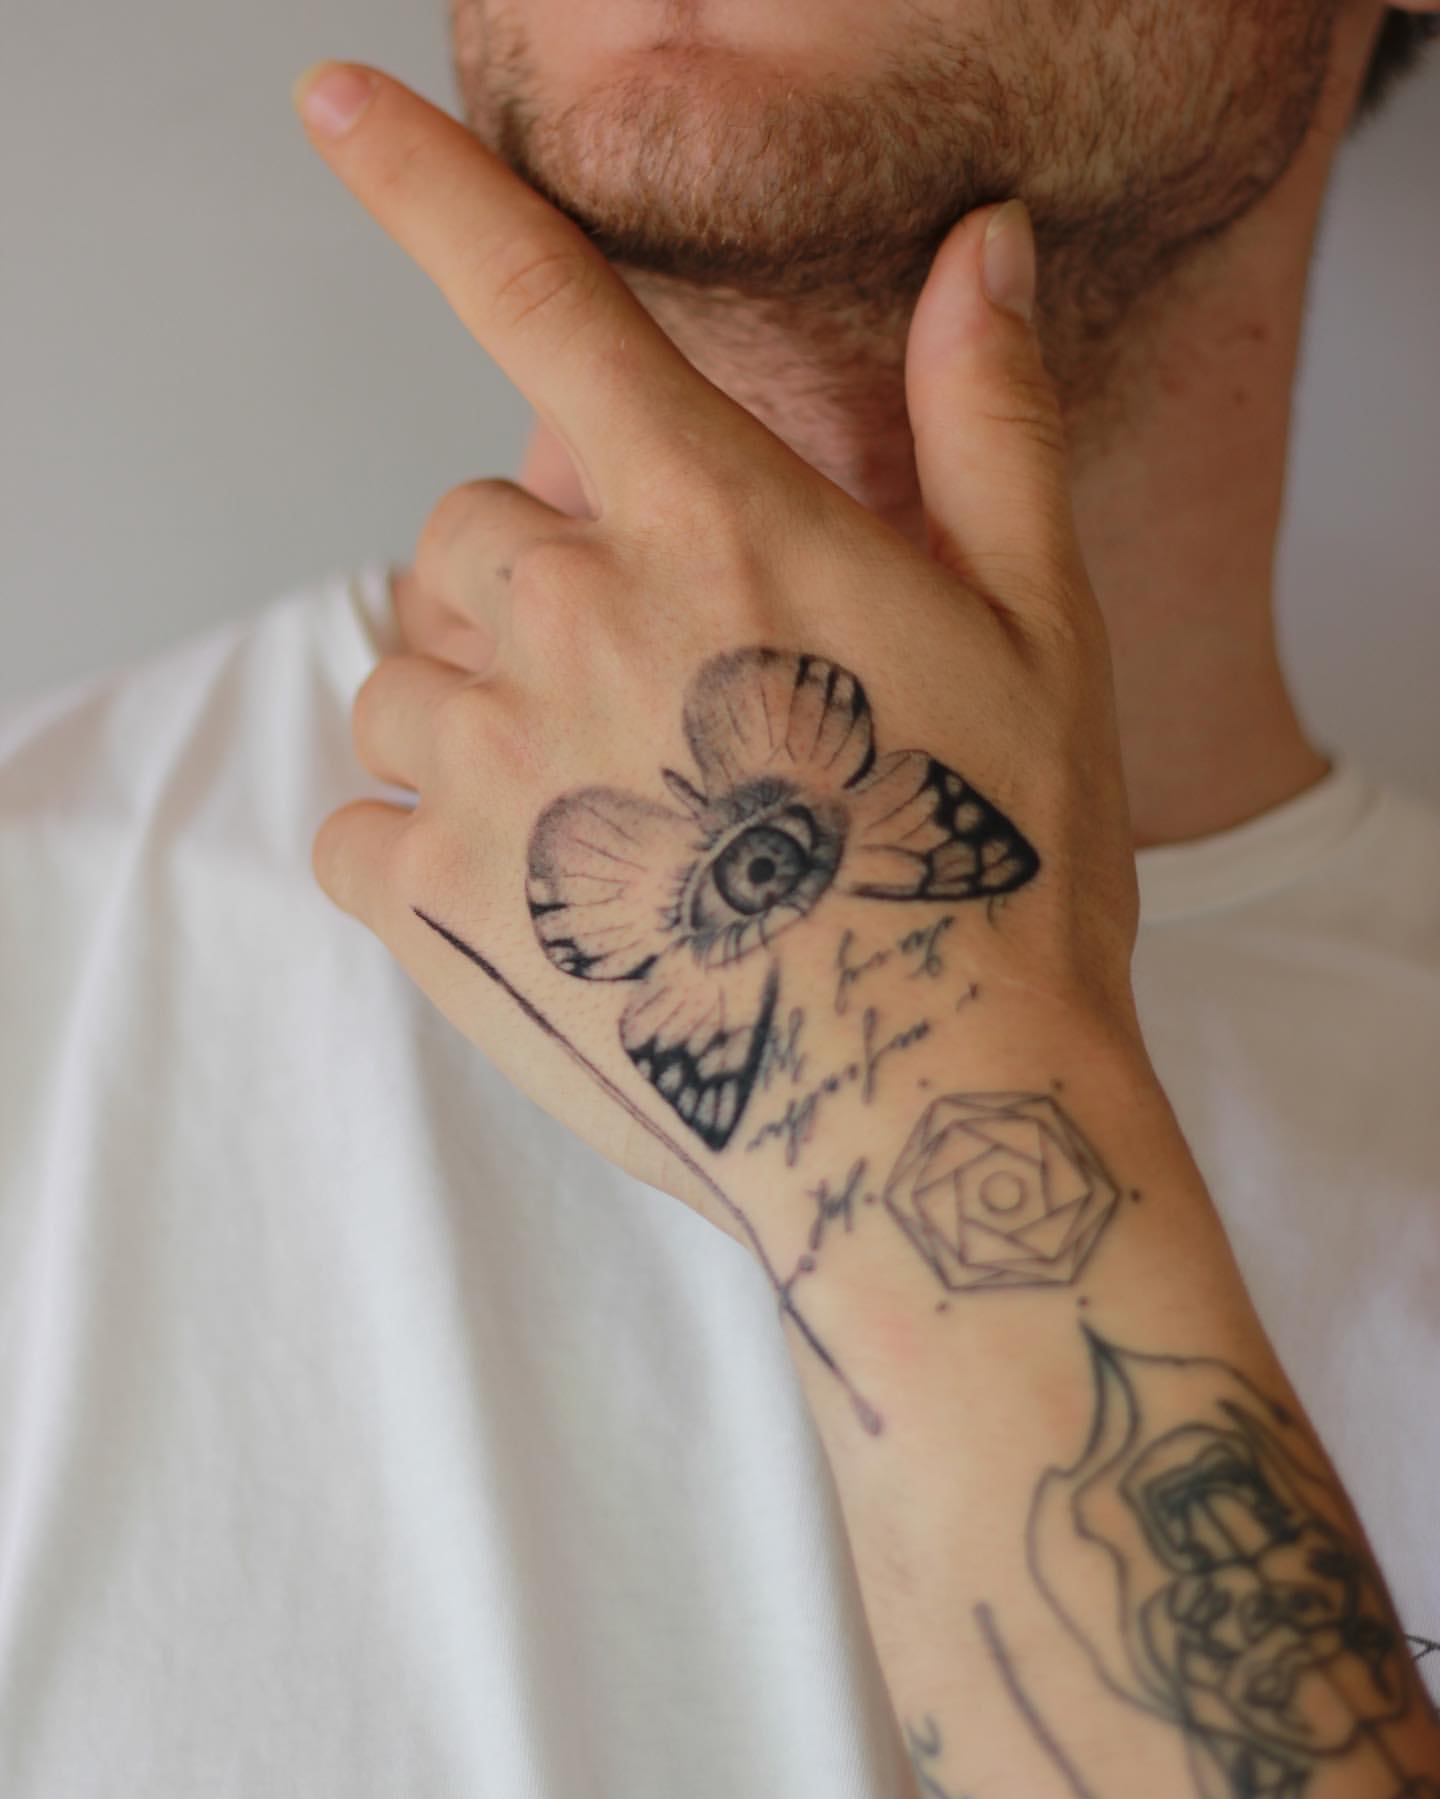 Butterfly Hand Tattoo Ideas 29